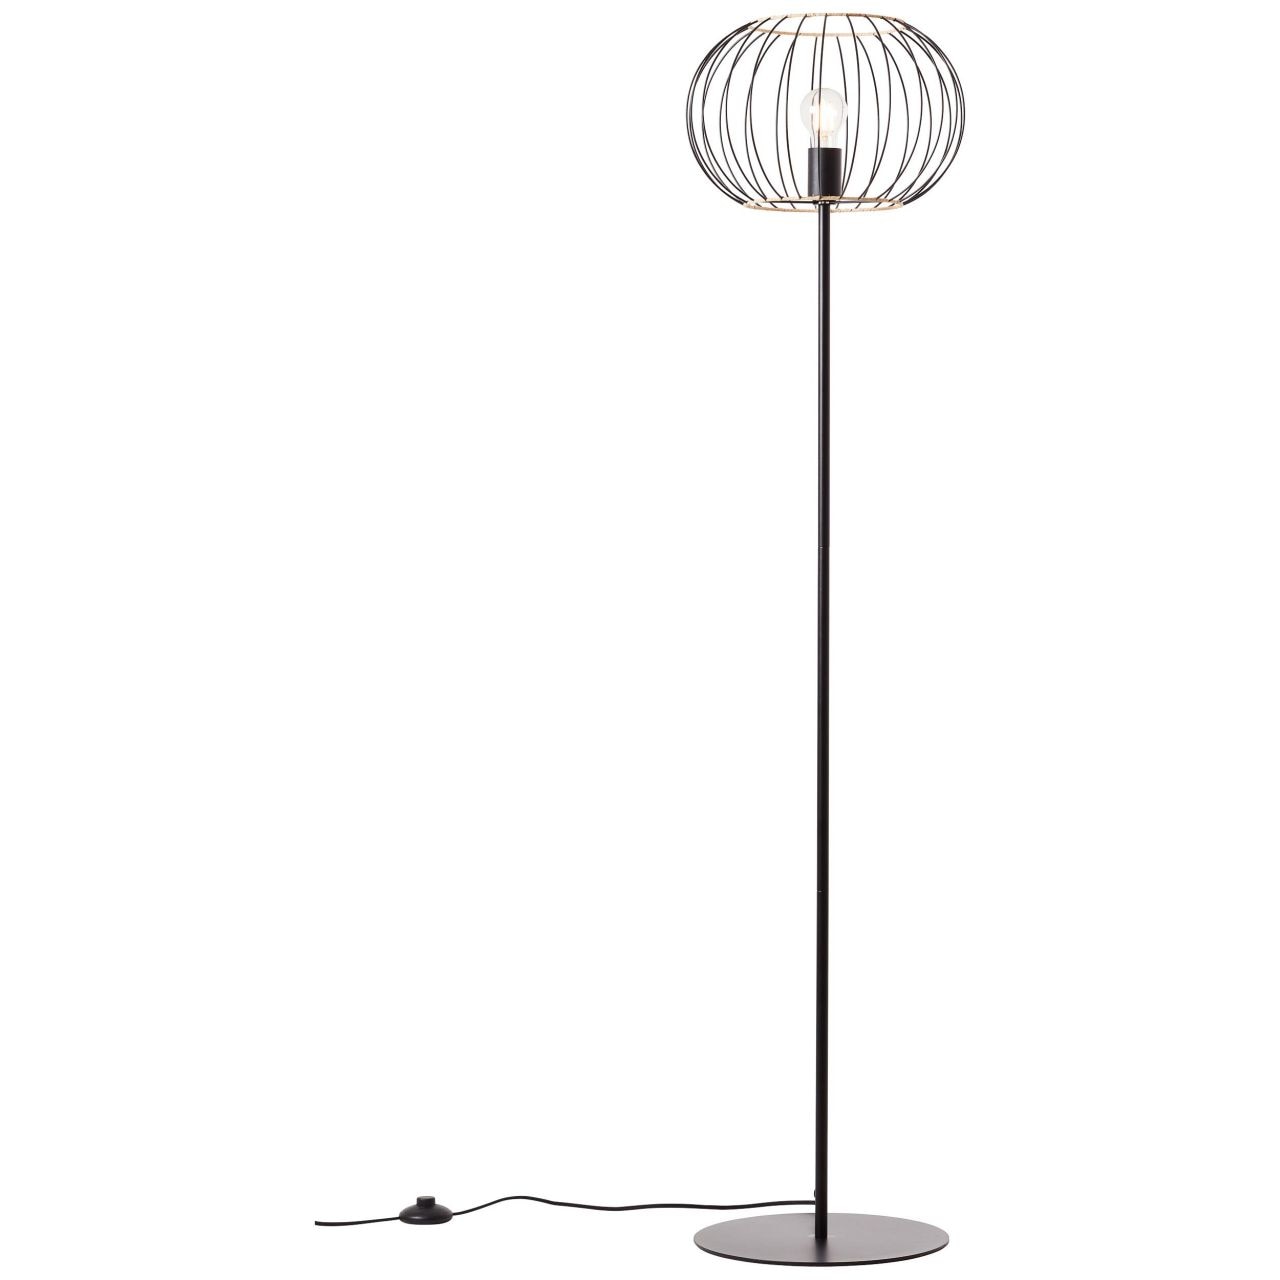 Brilliant Stehlampe »Silemia«, 1 flammig-flammig, 151,5 cm Höhe, Ø 36 cm,  E27, Metall/Rattan, schwarz matt online kaufen